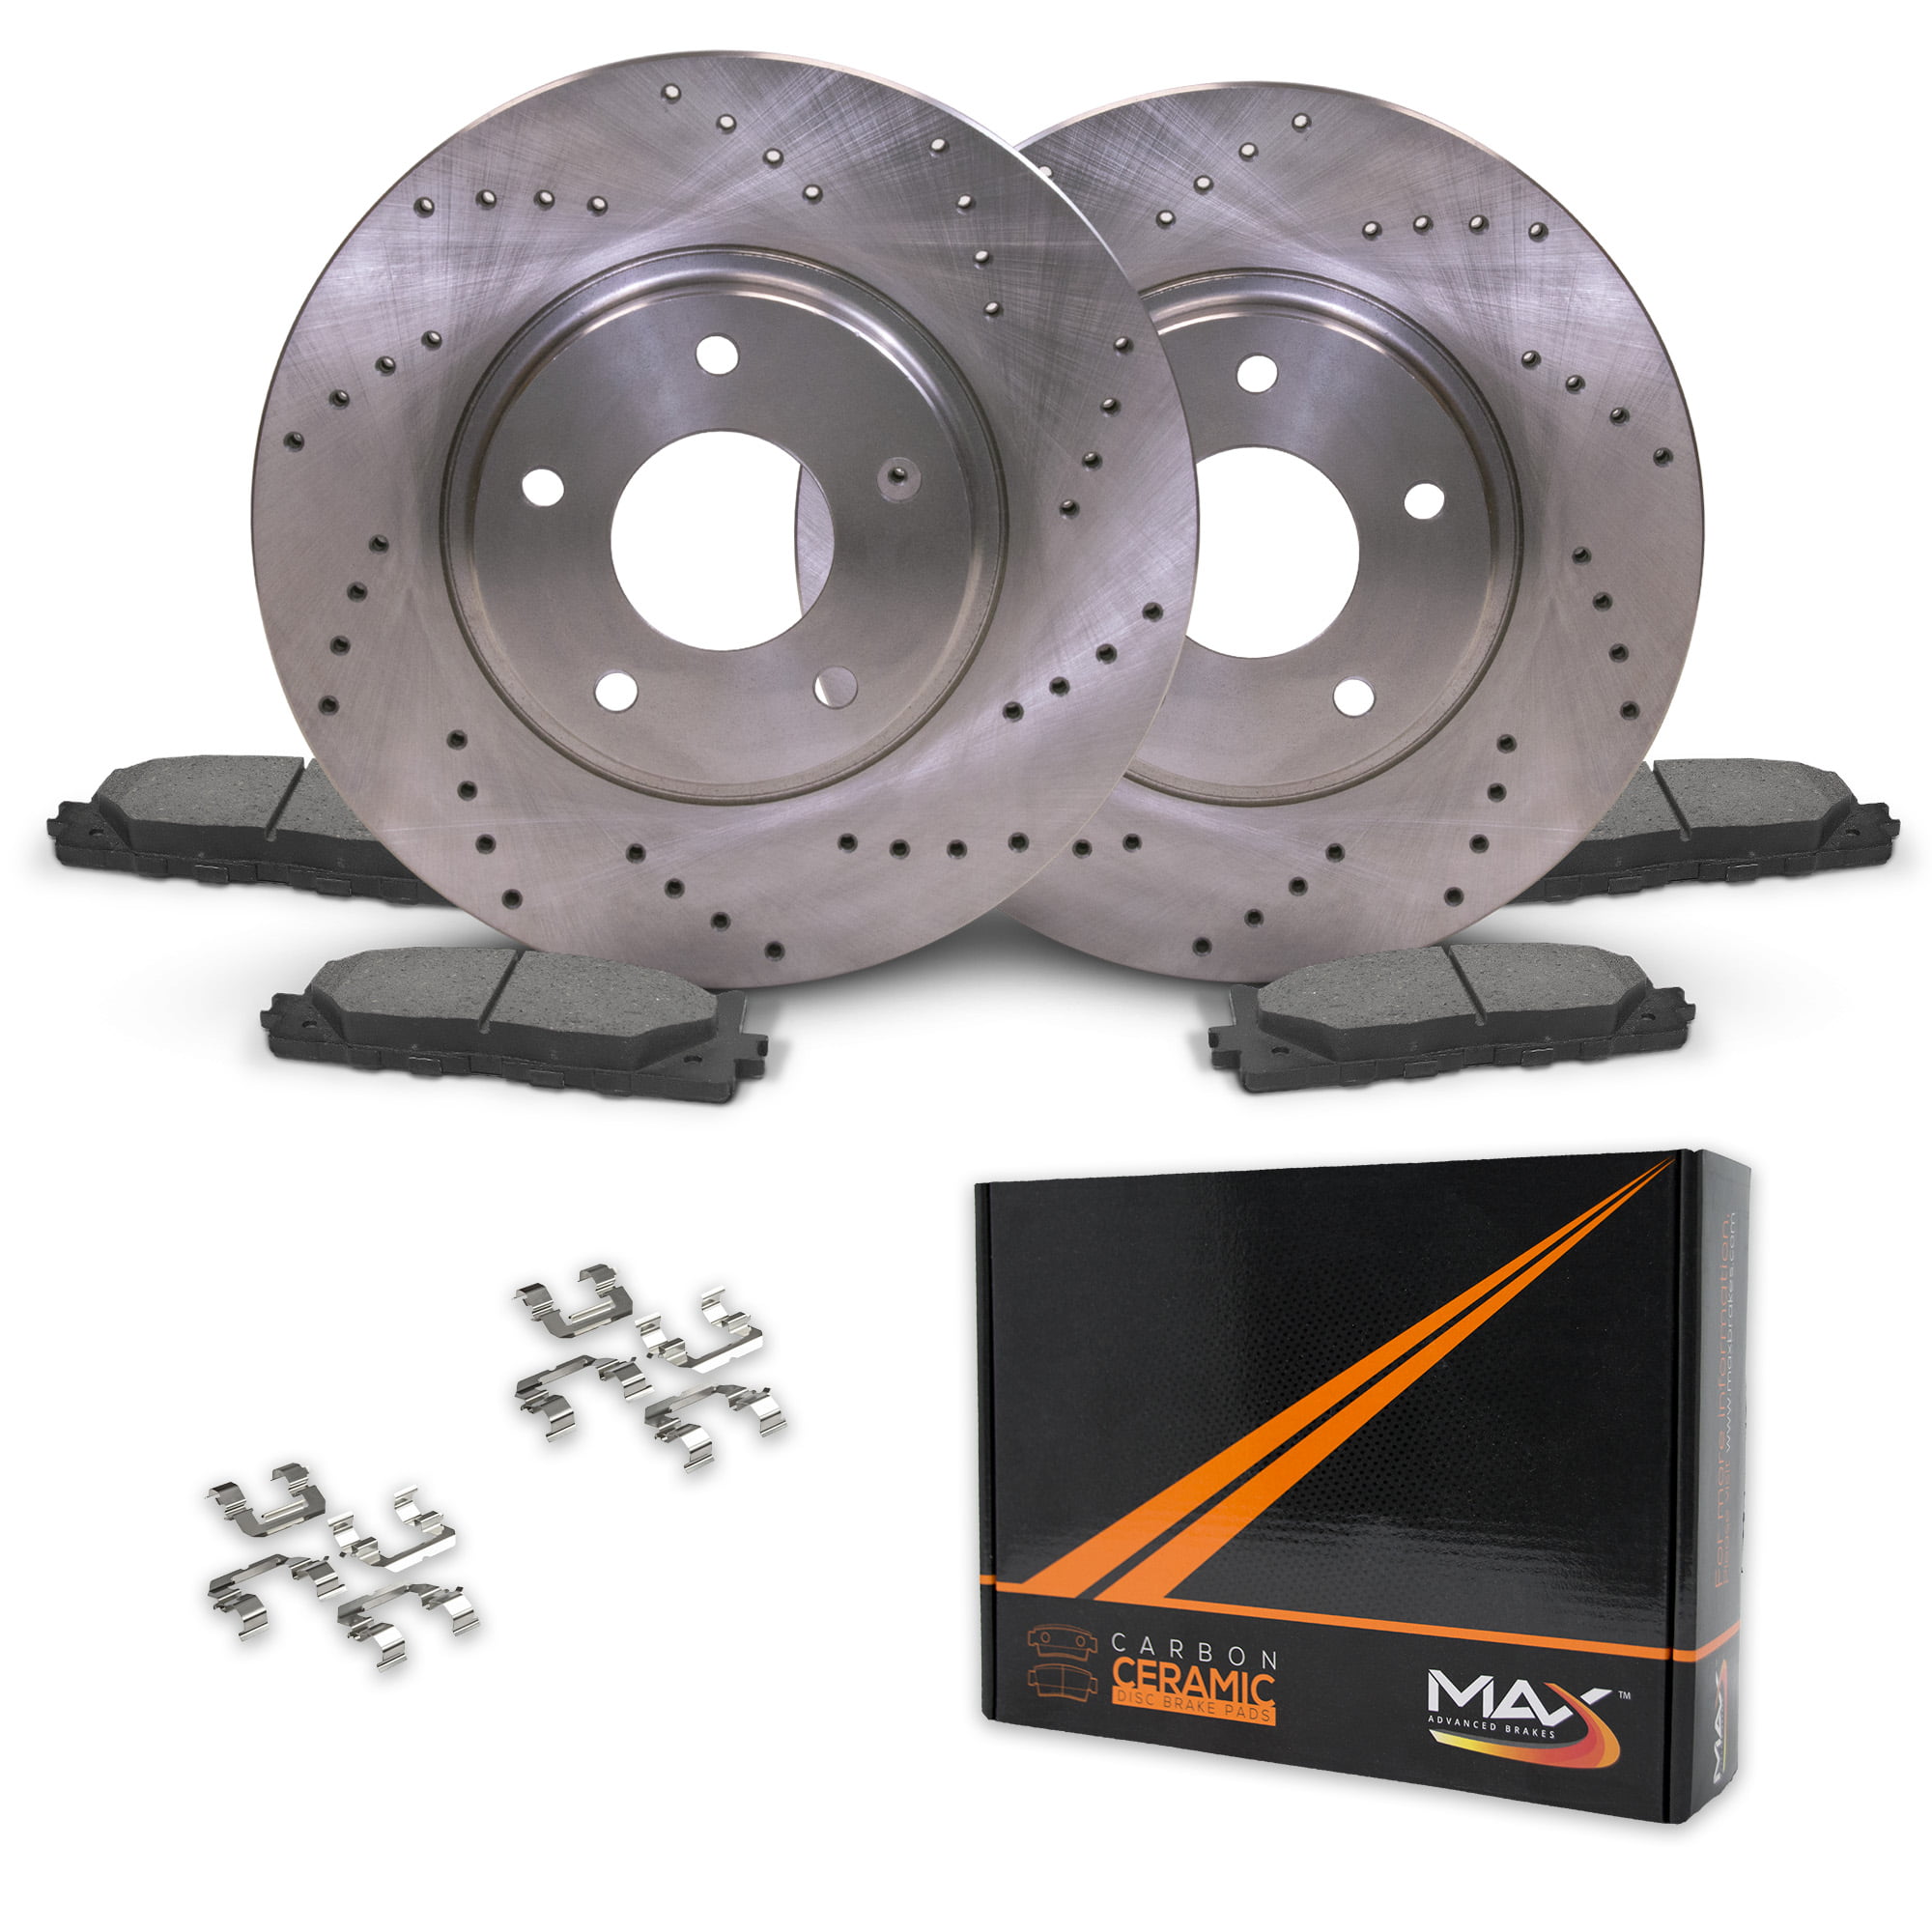 REAR] Max Brakes PREMIUM XD Carbon Ceramic Pads KT083622 - Max